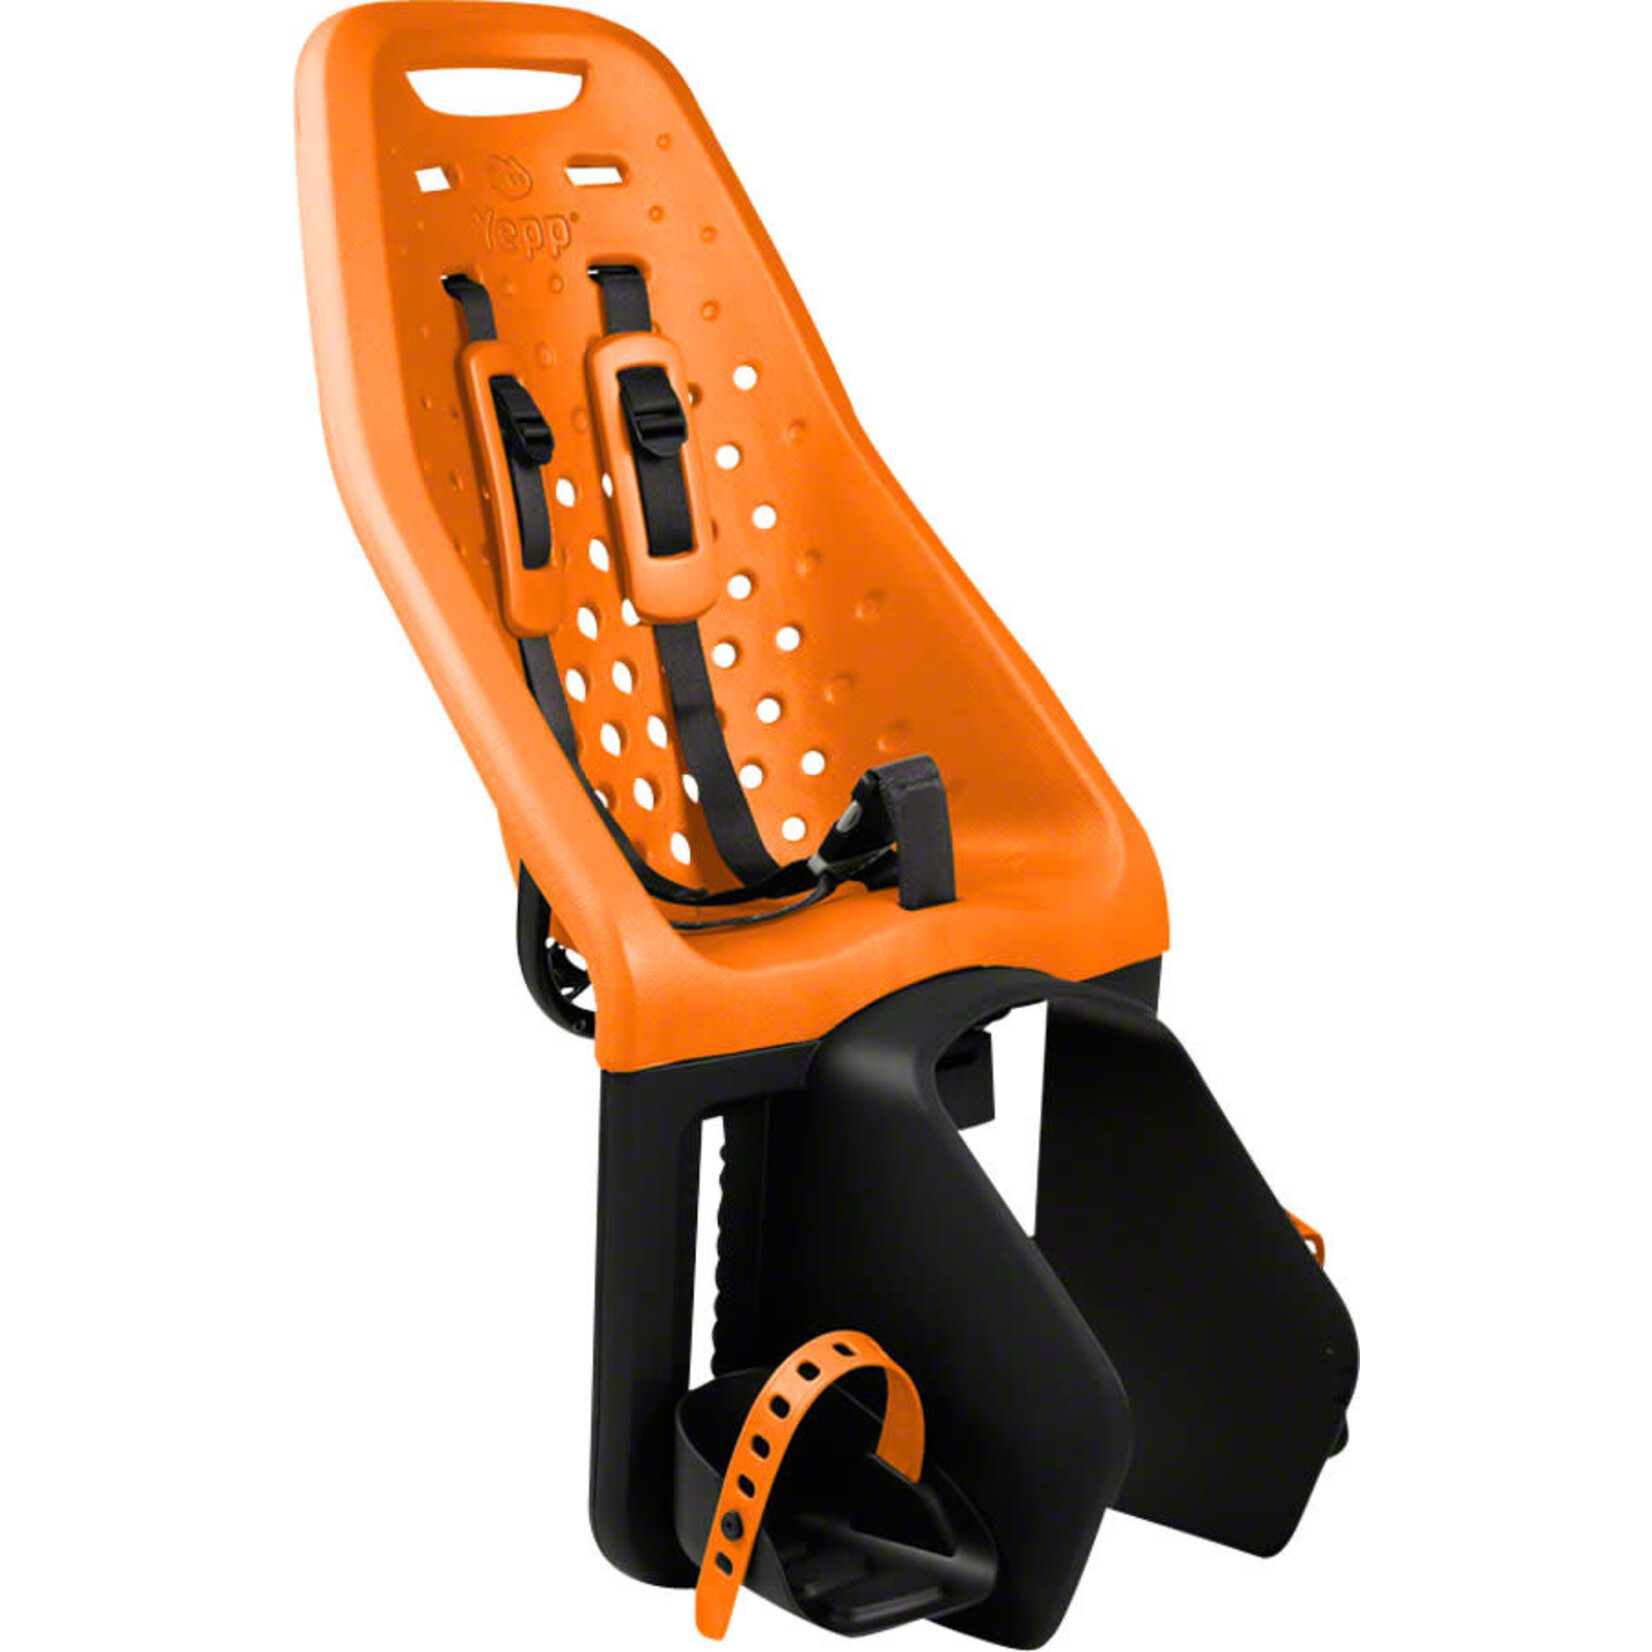 Thule Yepp Maxi Easyfit Rack Mount Child Seat